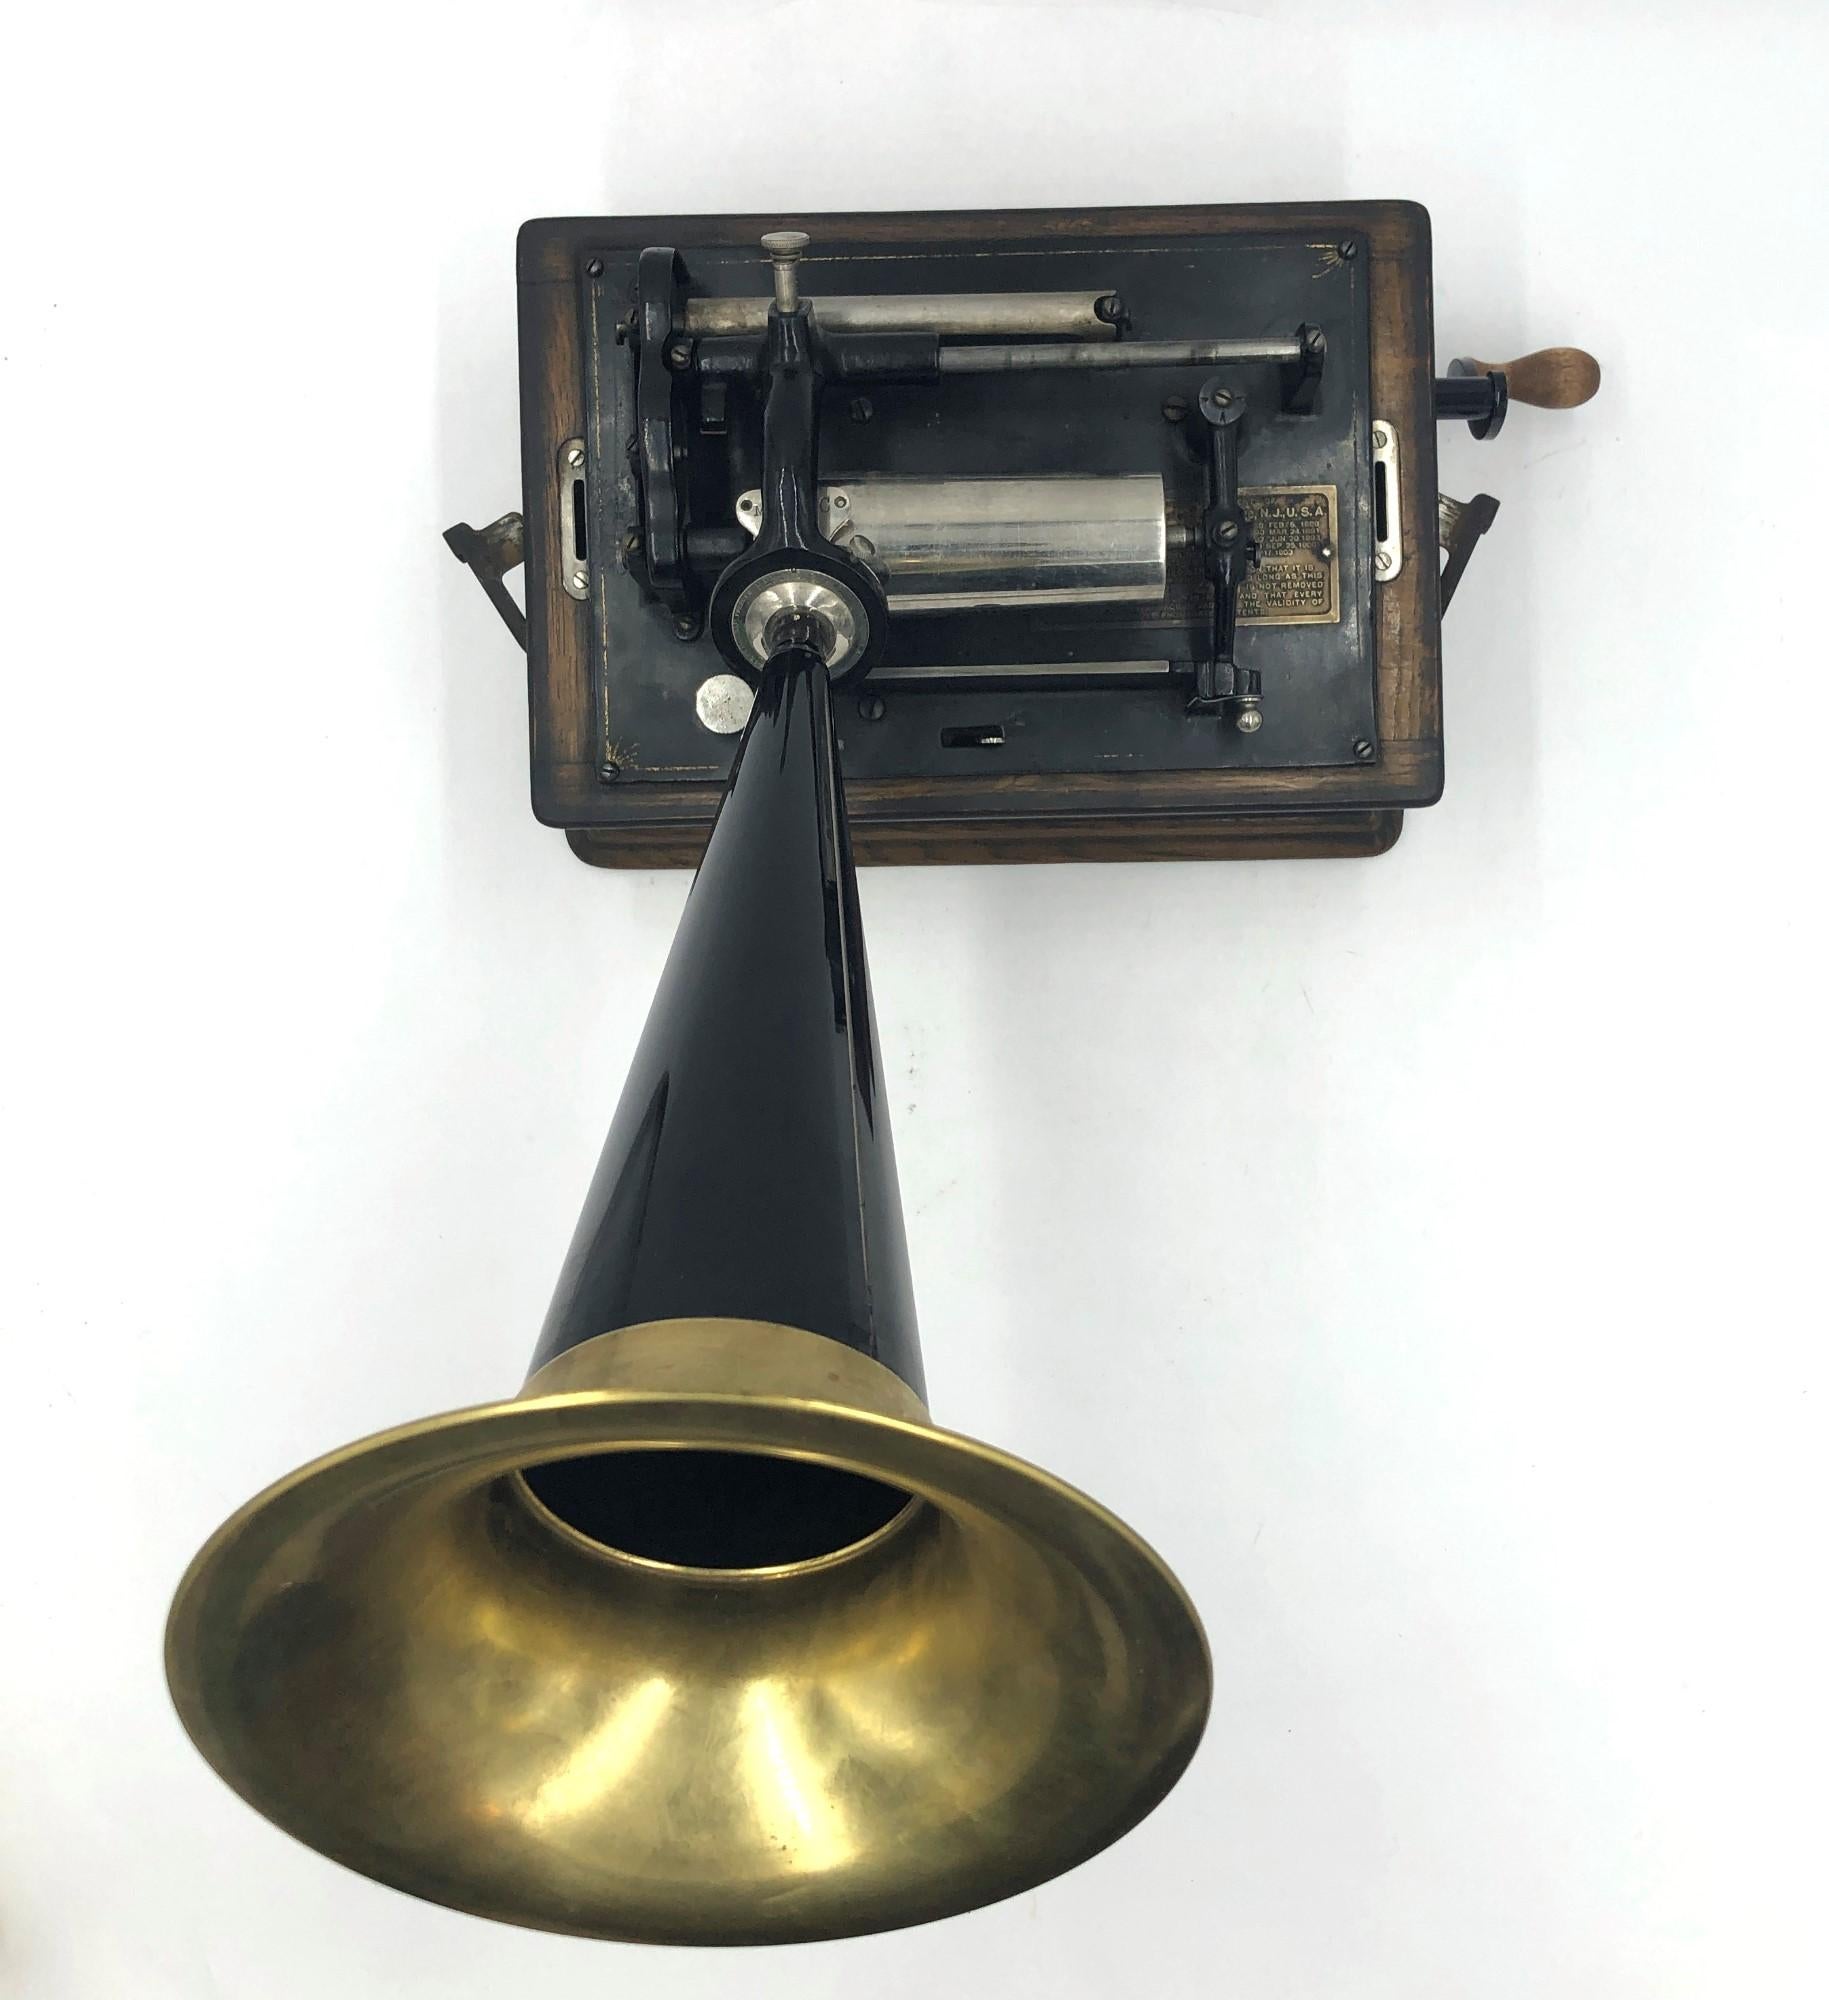 Working 1903 Edison Standard Cylinder Phonograph Manual Hand Crank 6